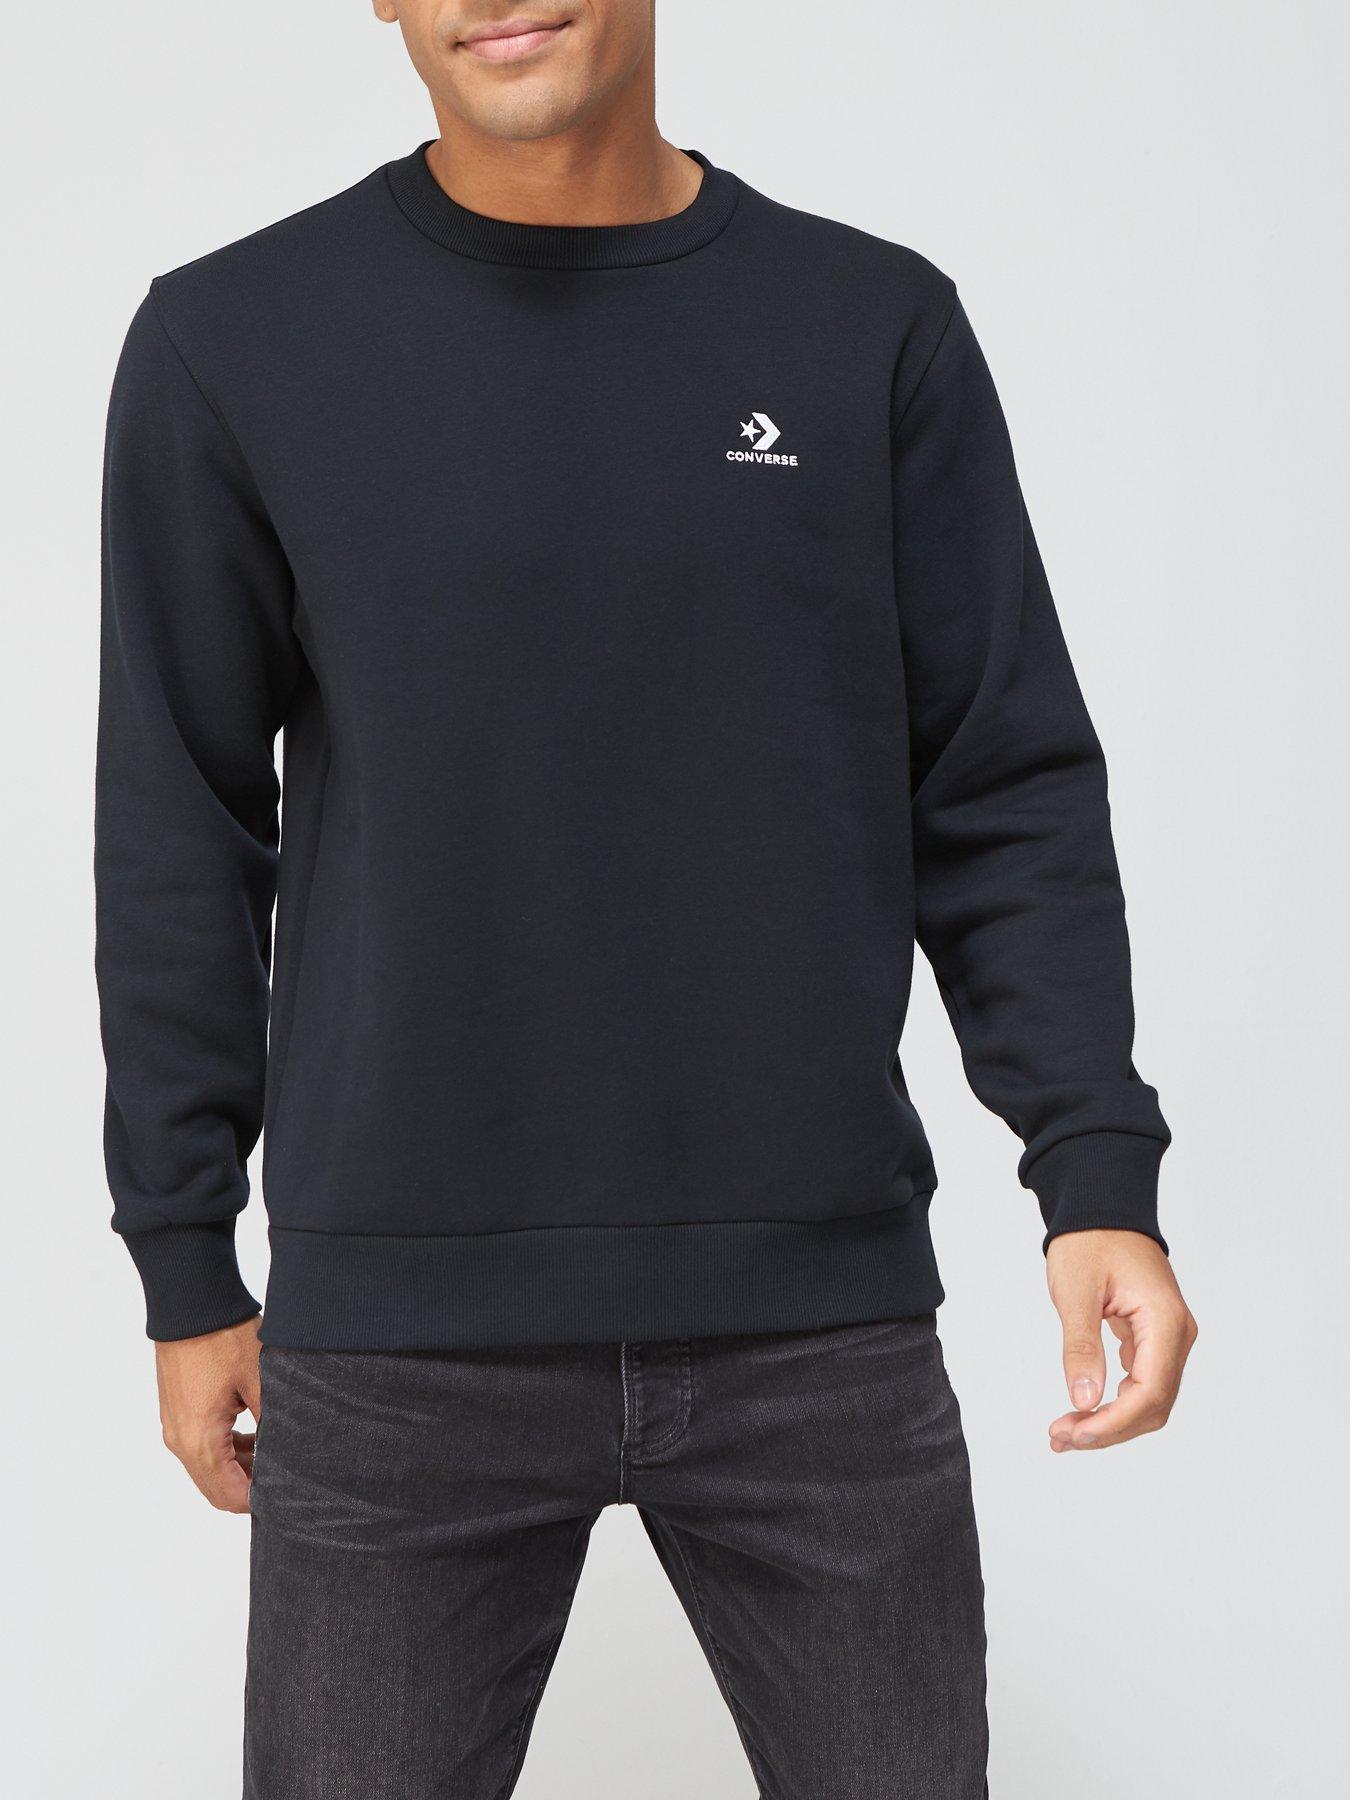 Hoodies & Sweatshirts Embroidered Star Chevron Crew - Black